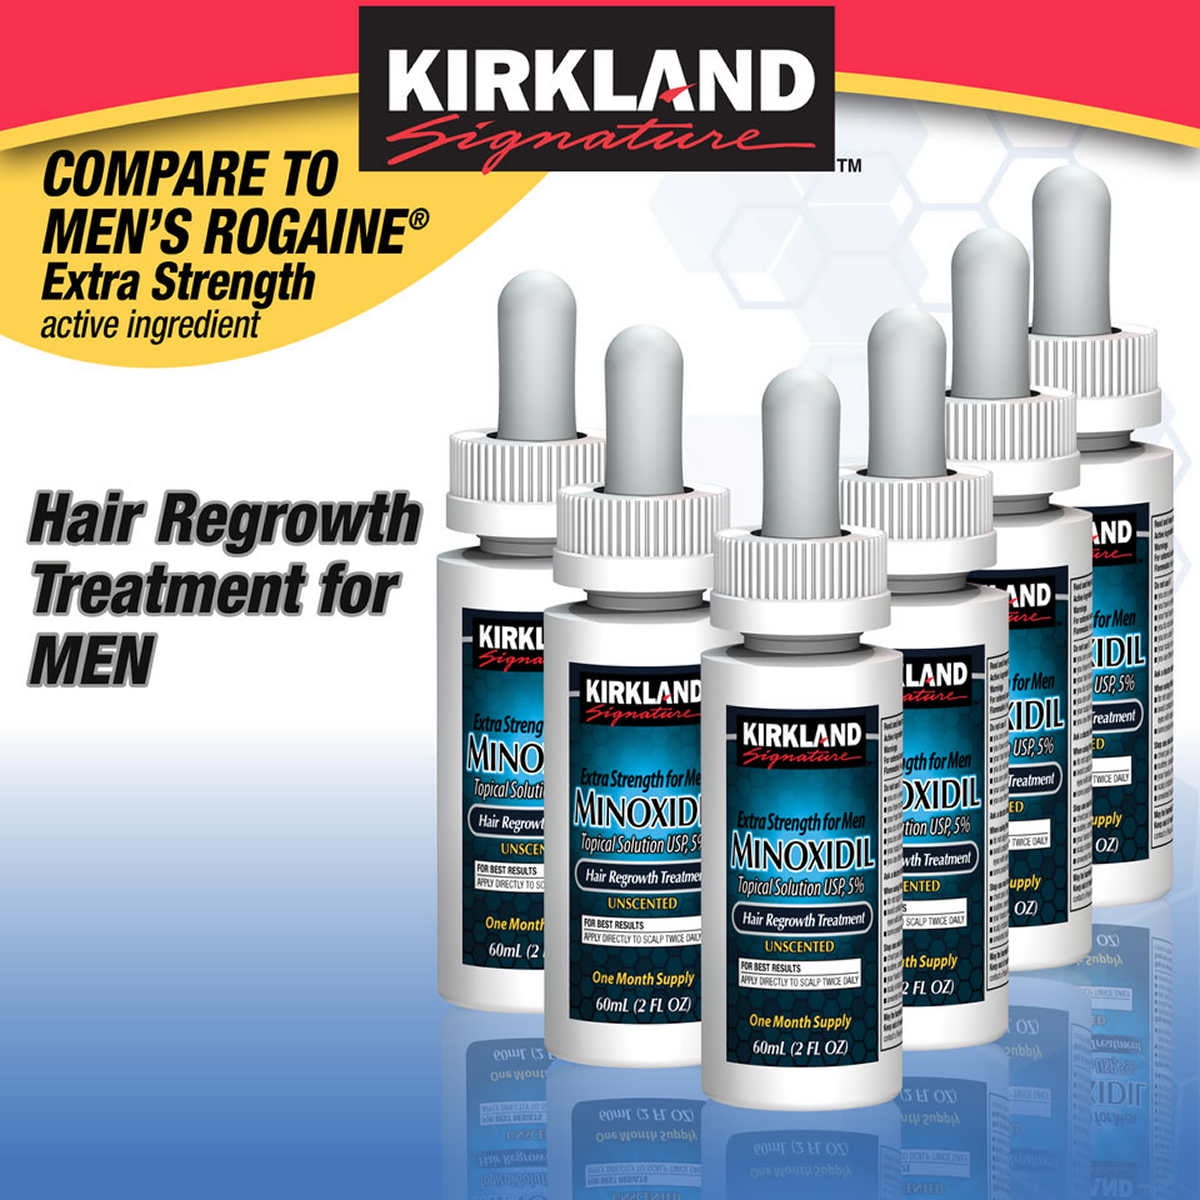 Hair Regrowth Treatment (6) 2 fl oz. Topical Solution 5% Minoxidil -  